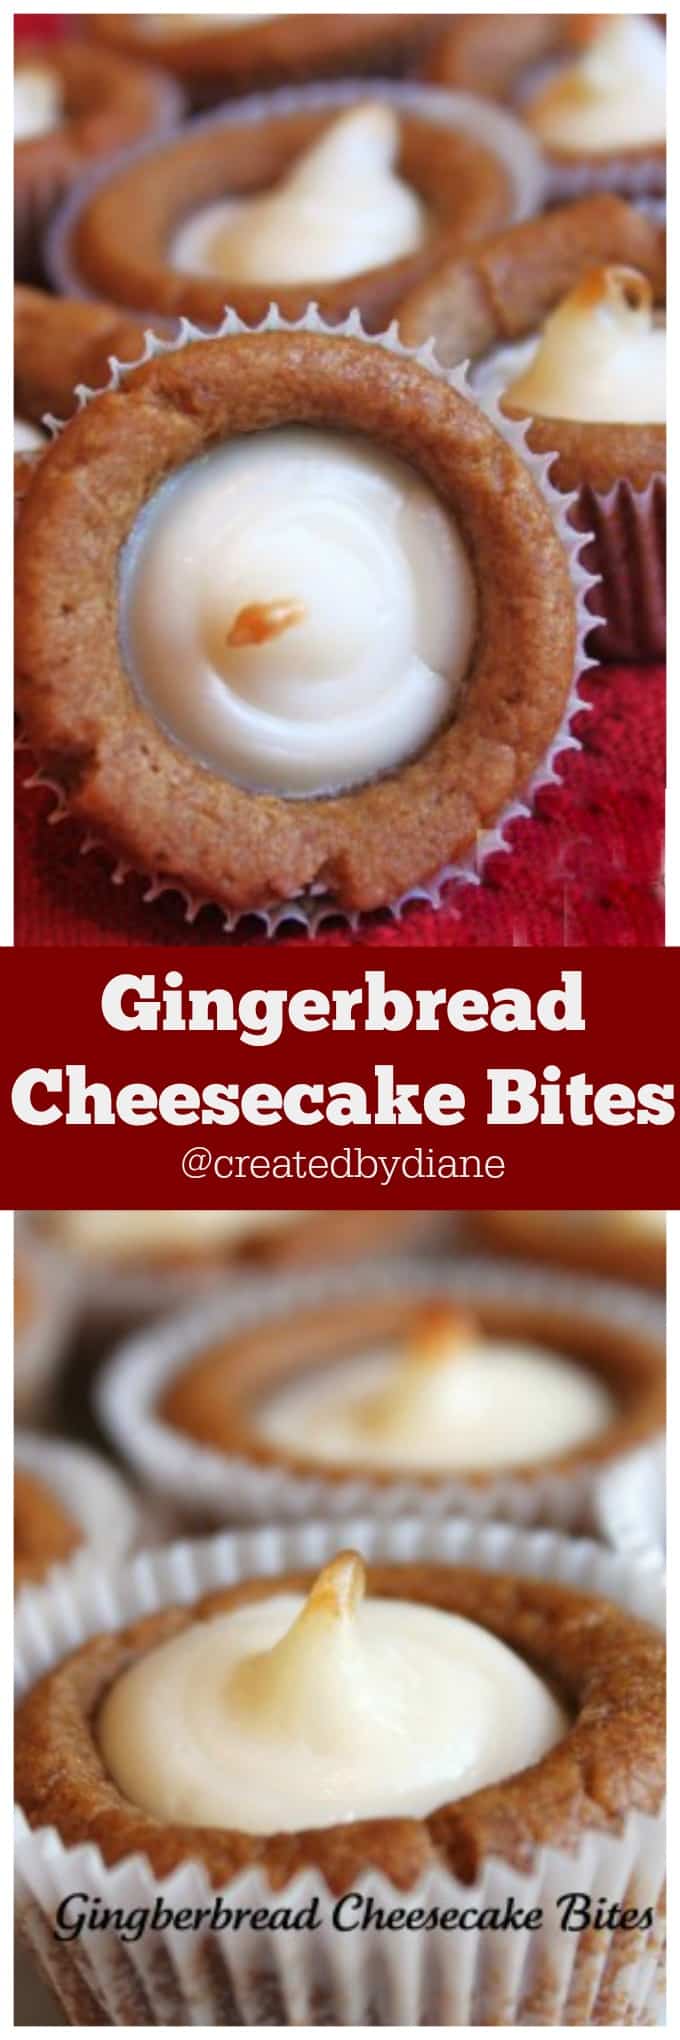 Gingerbread Cheesecake Bites @createdbydiane